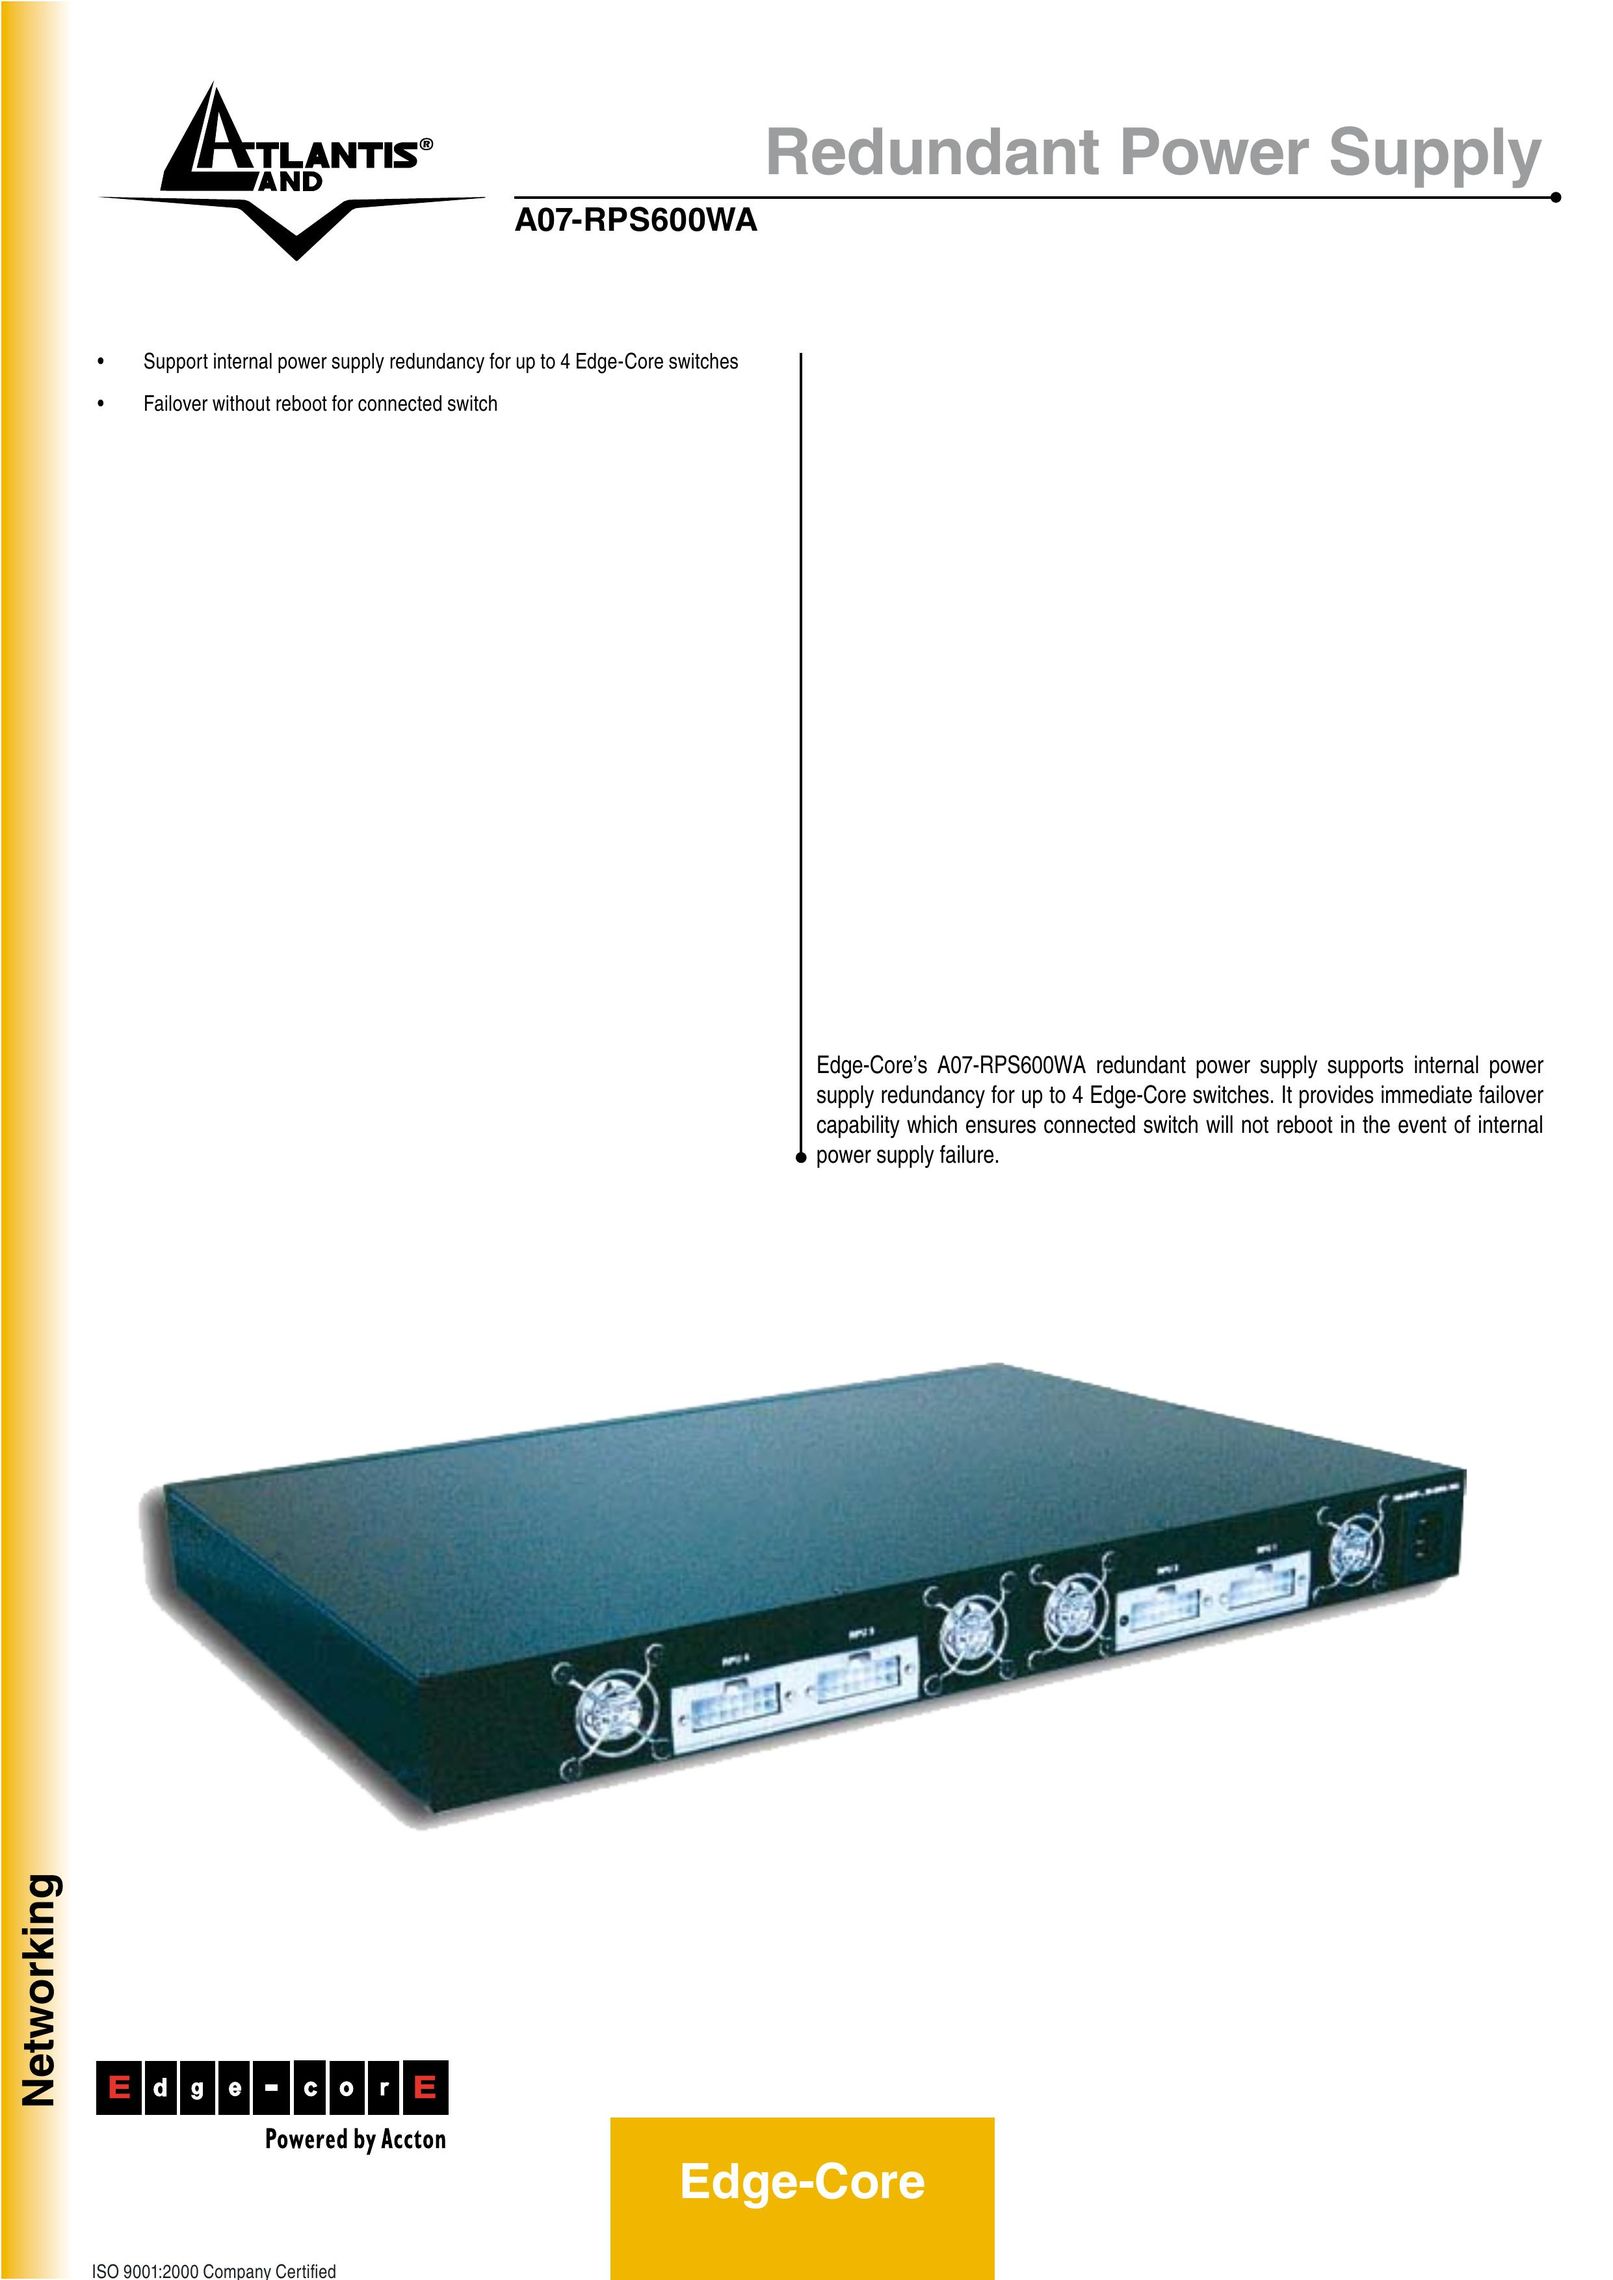 Atlantis Land A07-RPS600WA Power Supply User Manual